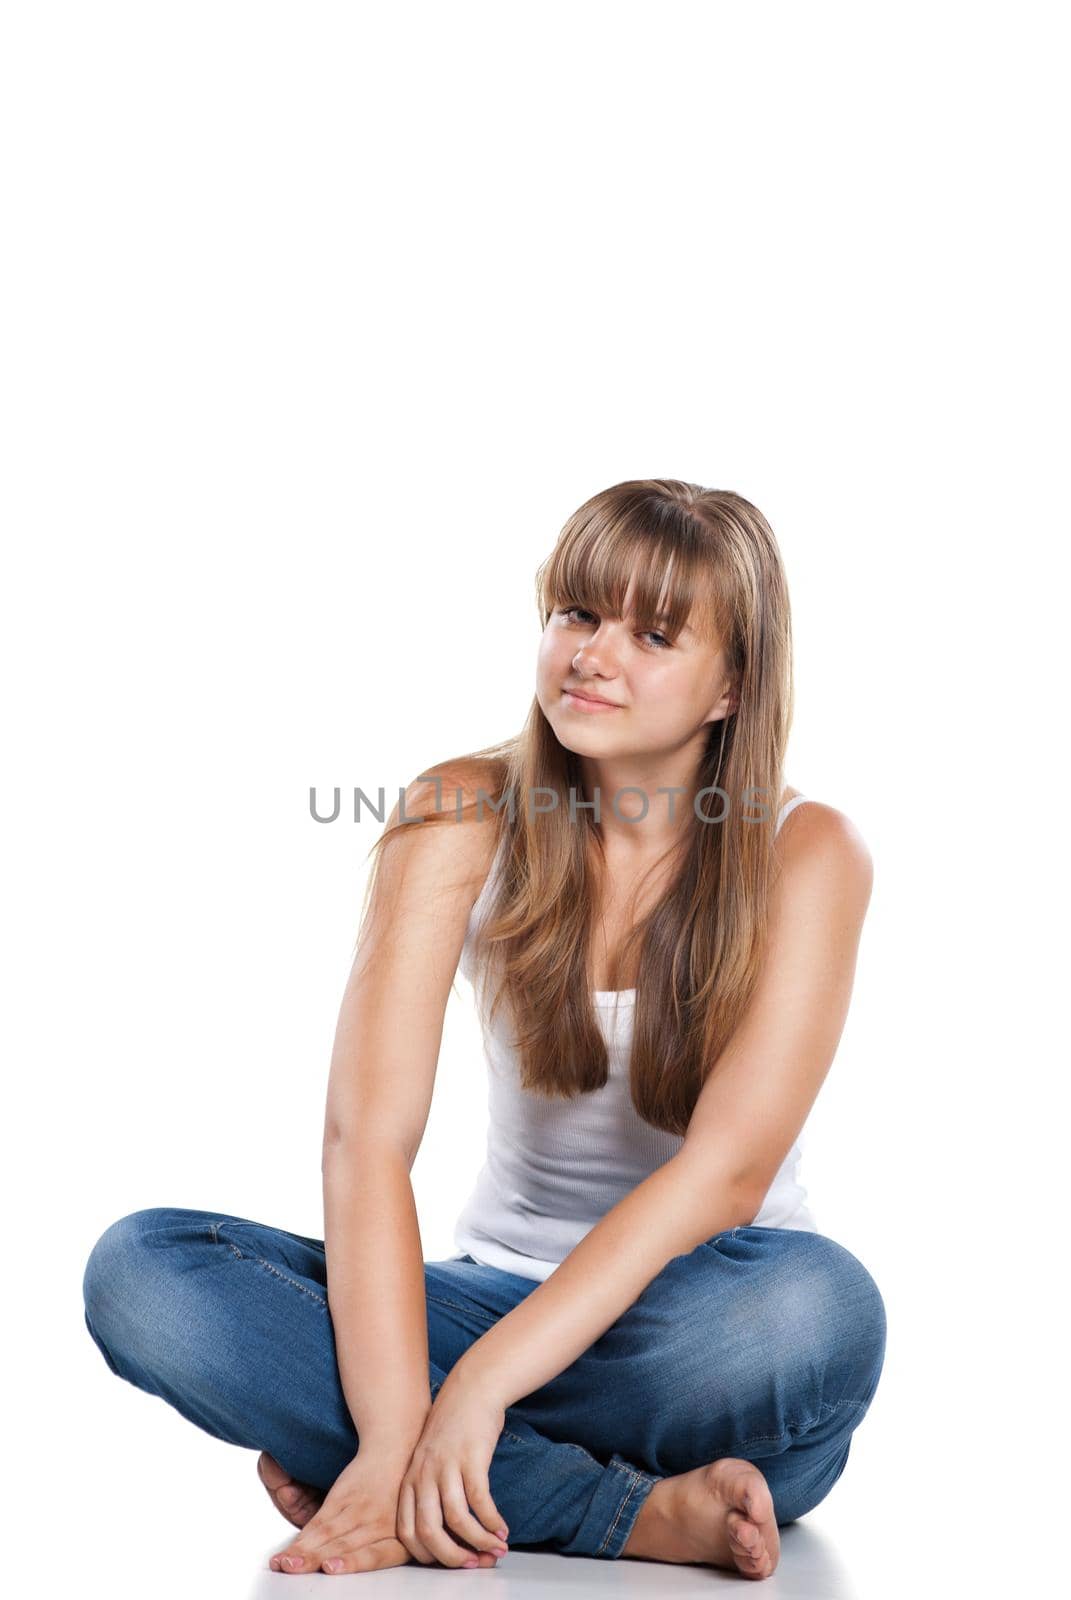 Smiling teenager girl sitting in studio on white background